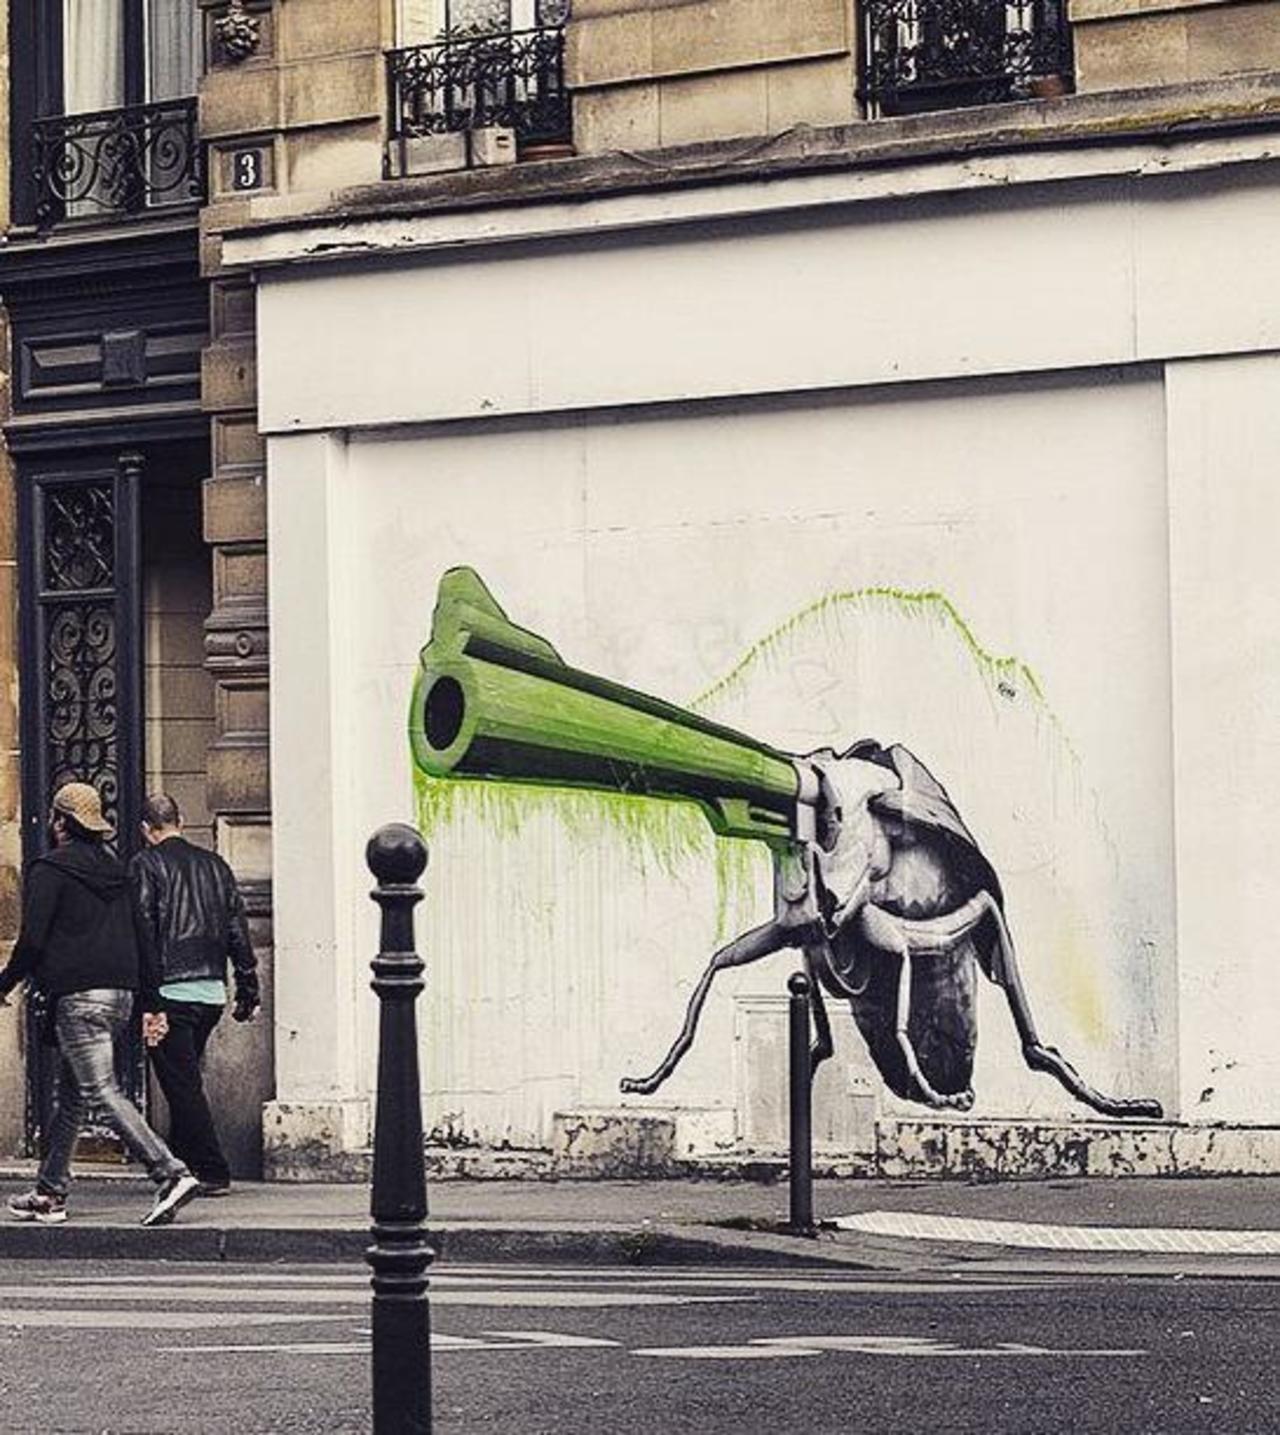 Technology merges with nature.
Street Art by Ludo in Paris 

#art #arte #graffiti #streetart http://t.co/5CnanPxqsR